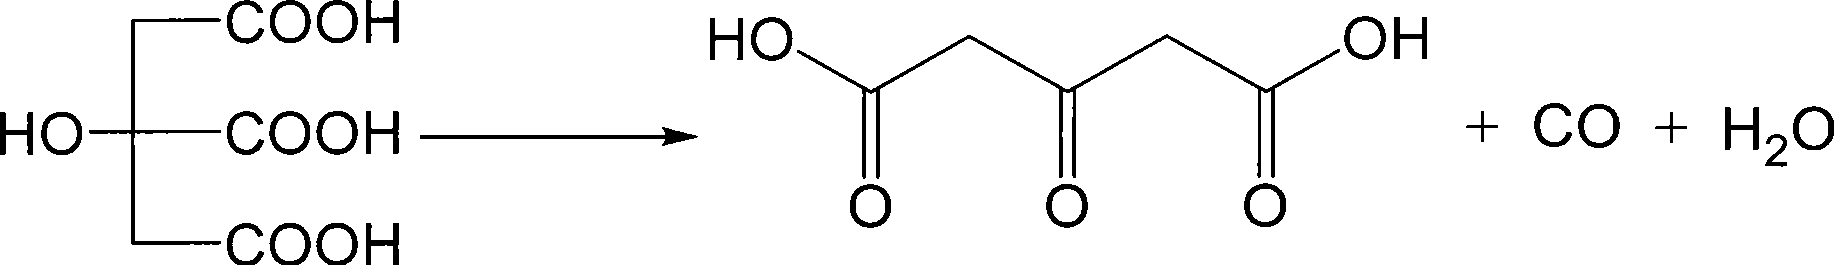 Preparation of dimethyl acetone-1,3-dicarboxylate